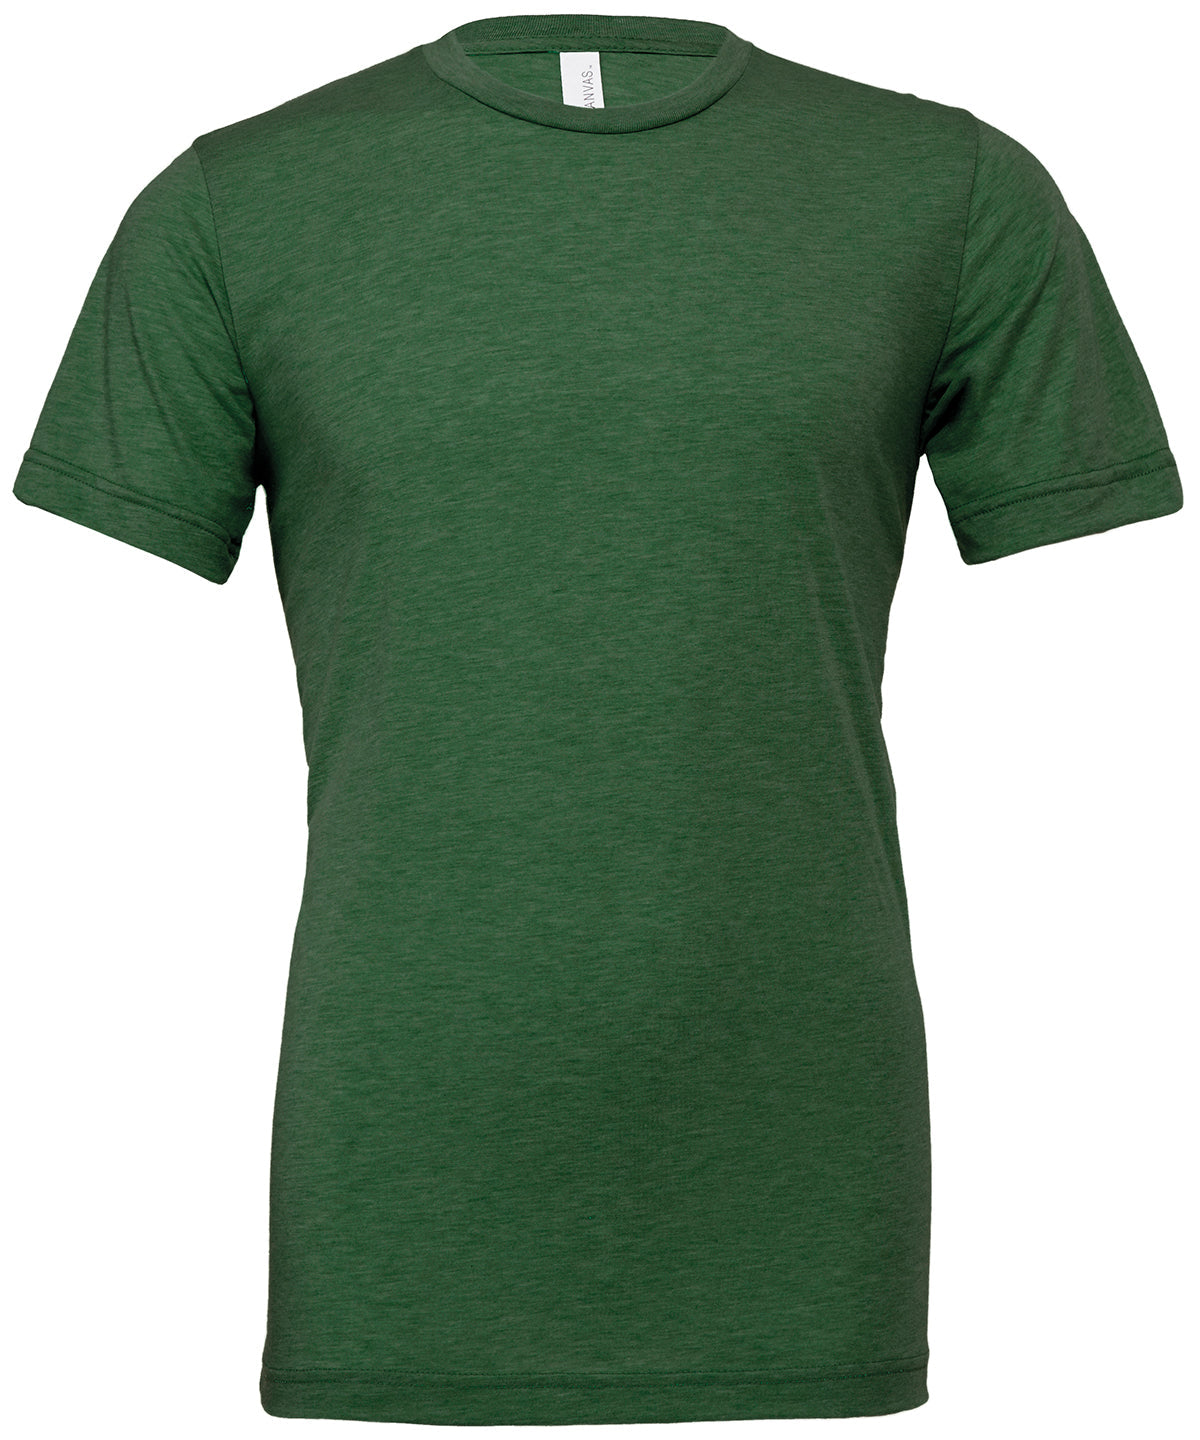 Bella Canvas Unisex Triblend Crew Neck T-Shirt - Grass Green Triblend